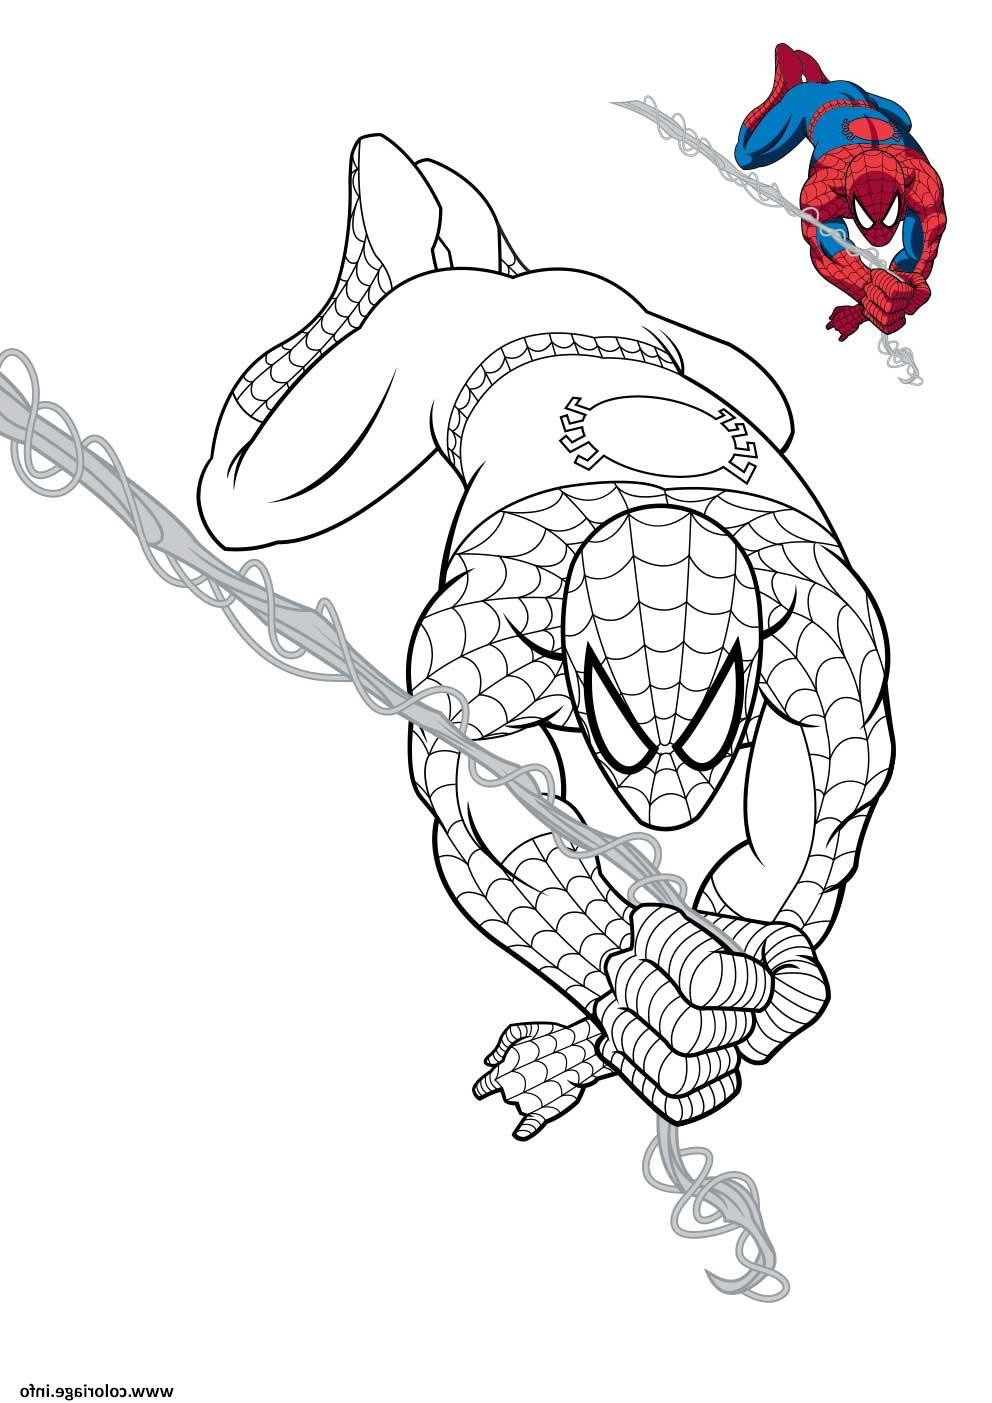 Coloriage Spiderman Facile Impressionnant Stock Coloriage Spiderman En